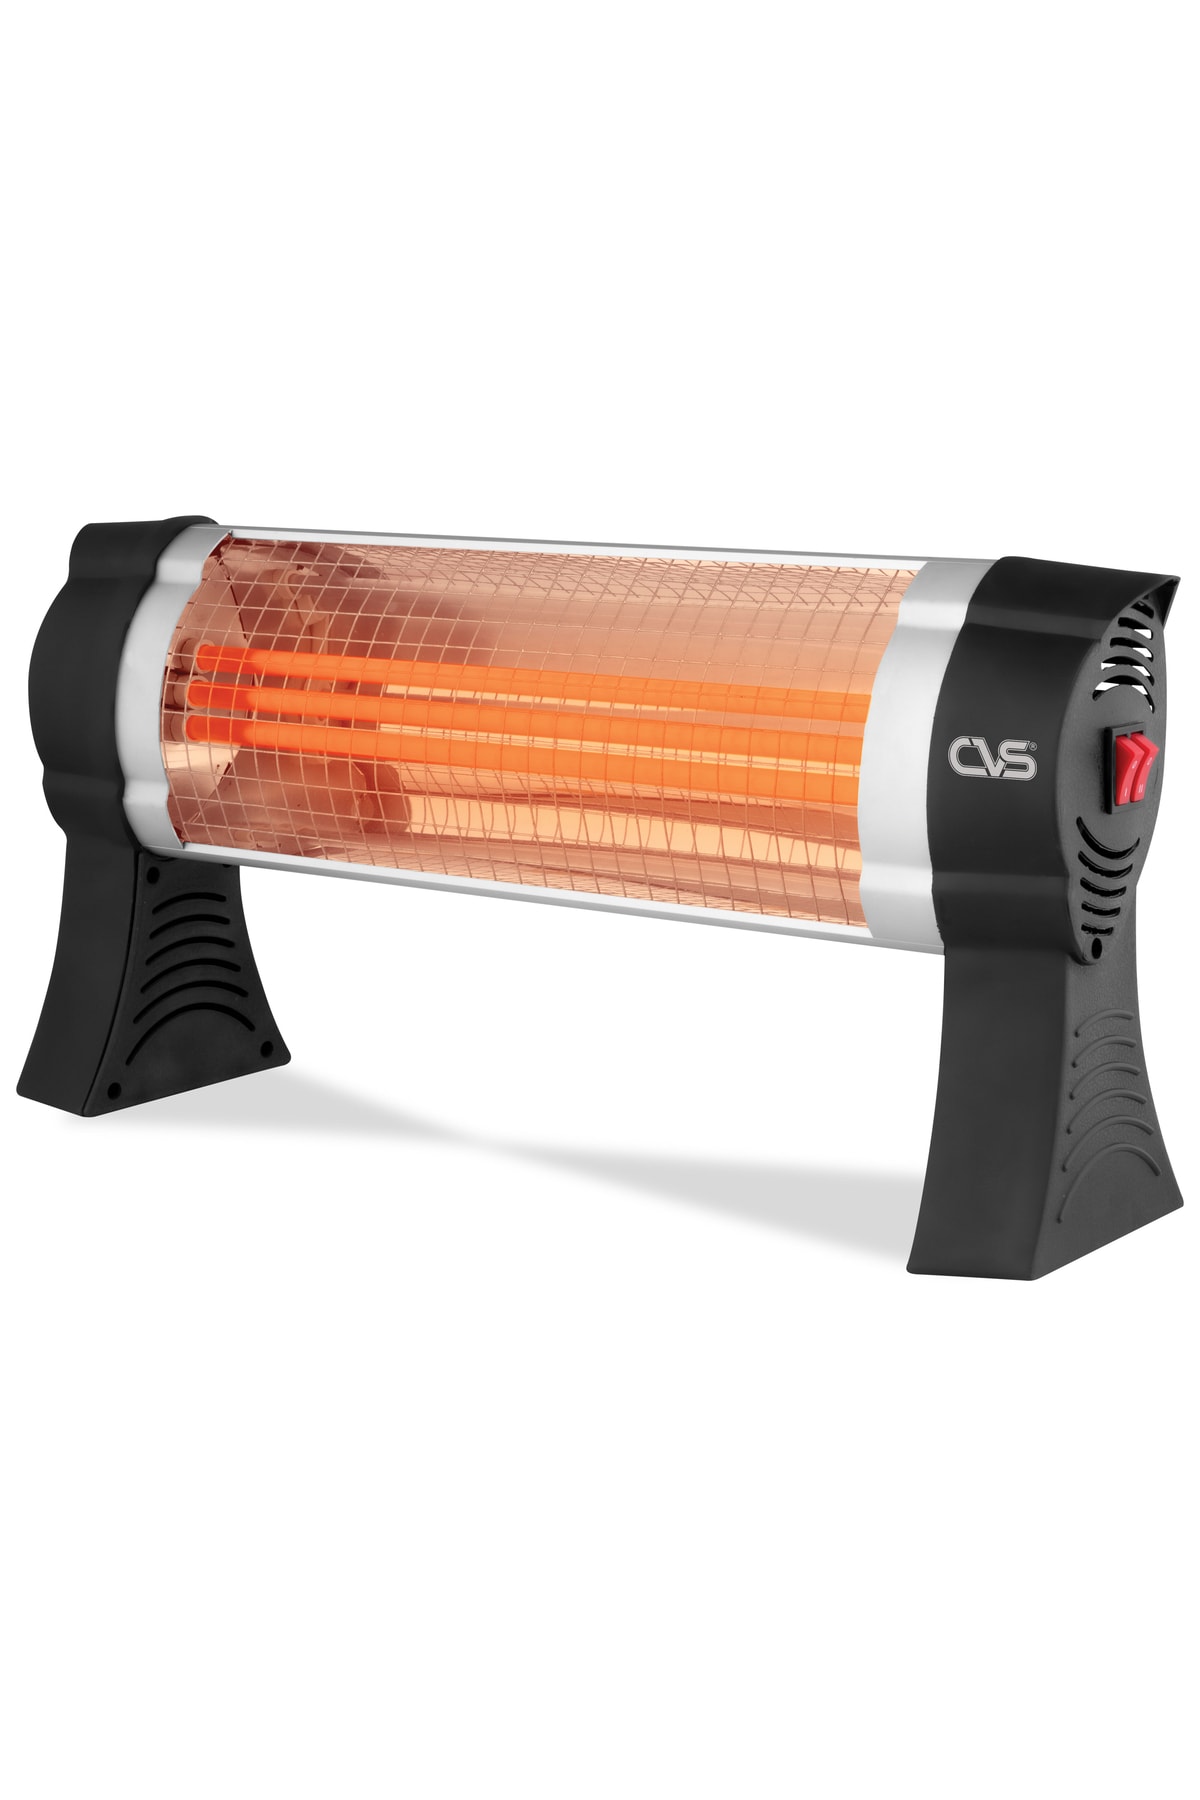 CVS Heater Under Table 3 Rod, 3 Sticks Of Quartz, 2 Stage Heating System, Hand-Free Grills, AC 220-240V / 50-60 Hz / 1500W, TUR-DN3033